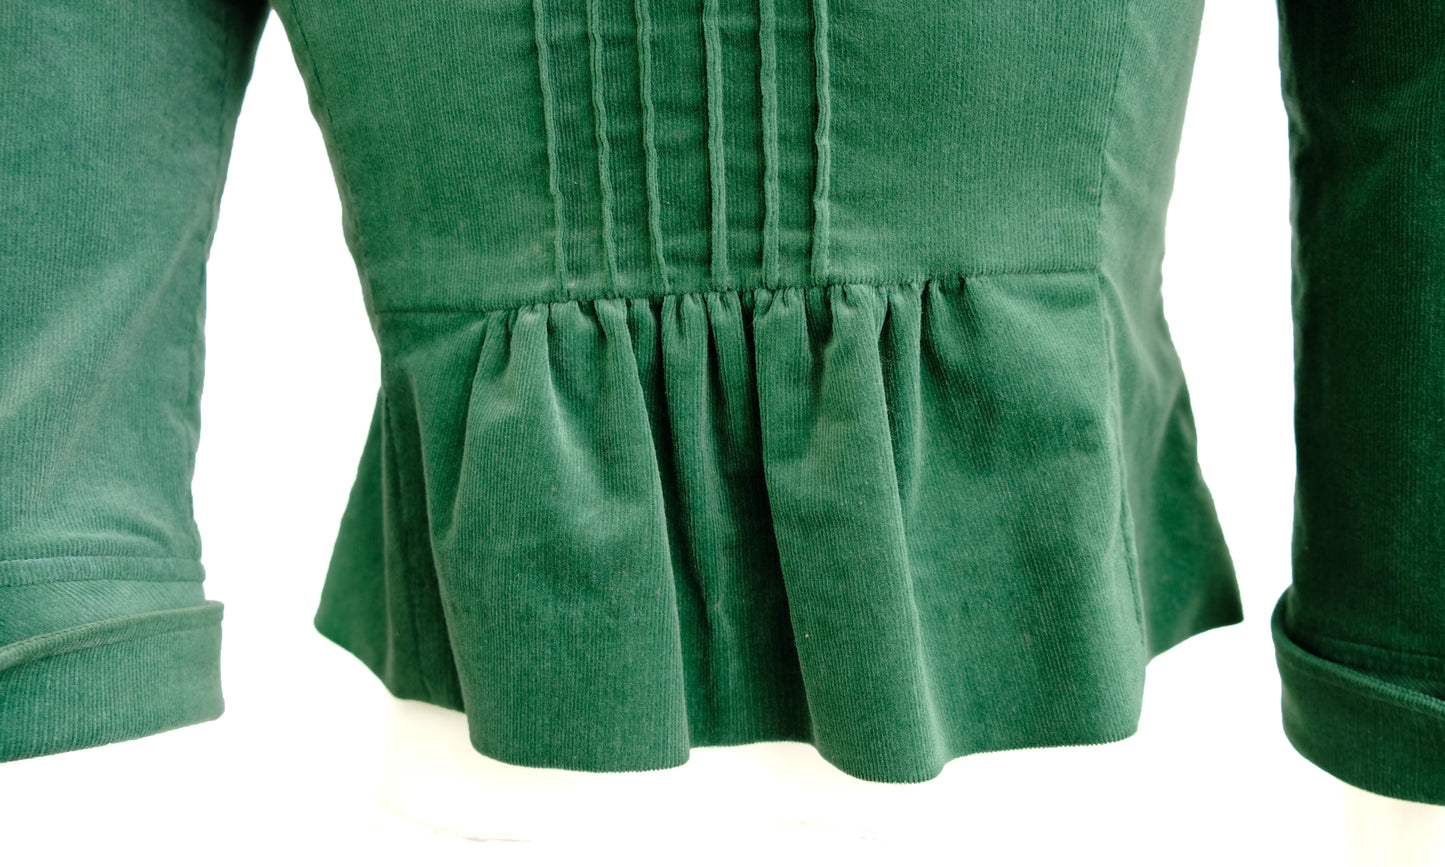 Jocomola de Sybilla Pintuck Jacket in Soft Green Needlecord, UK8